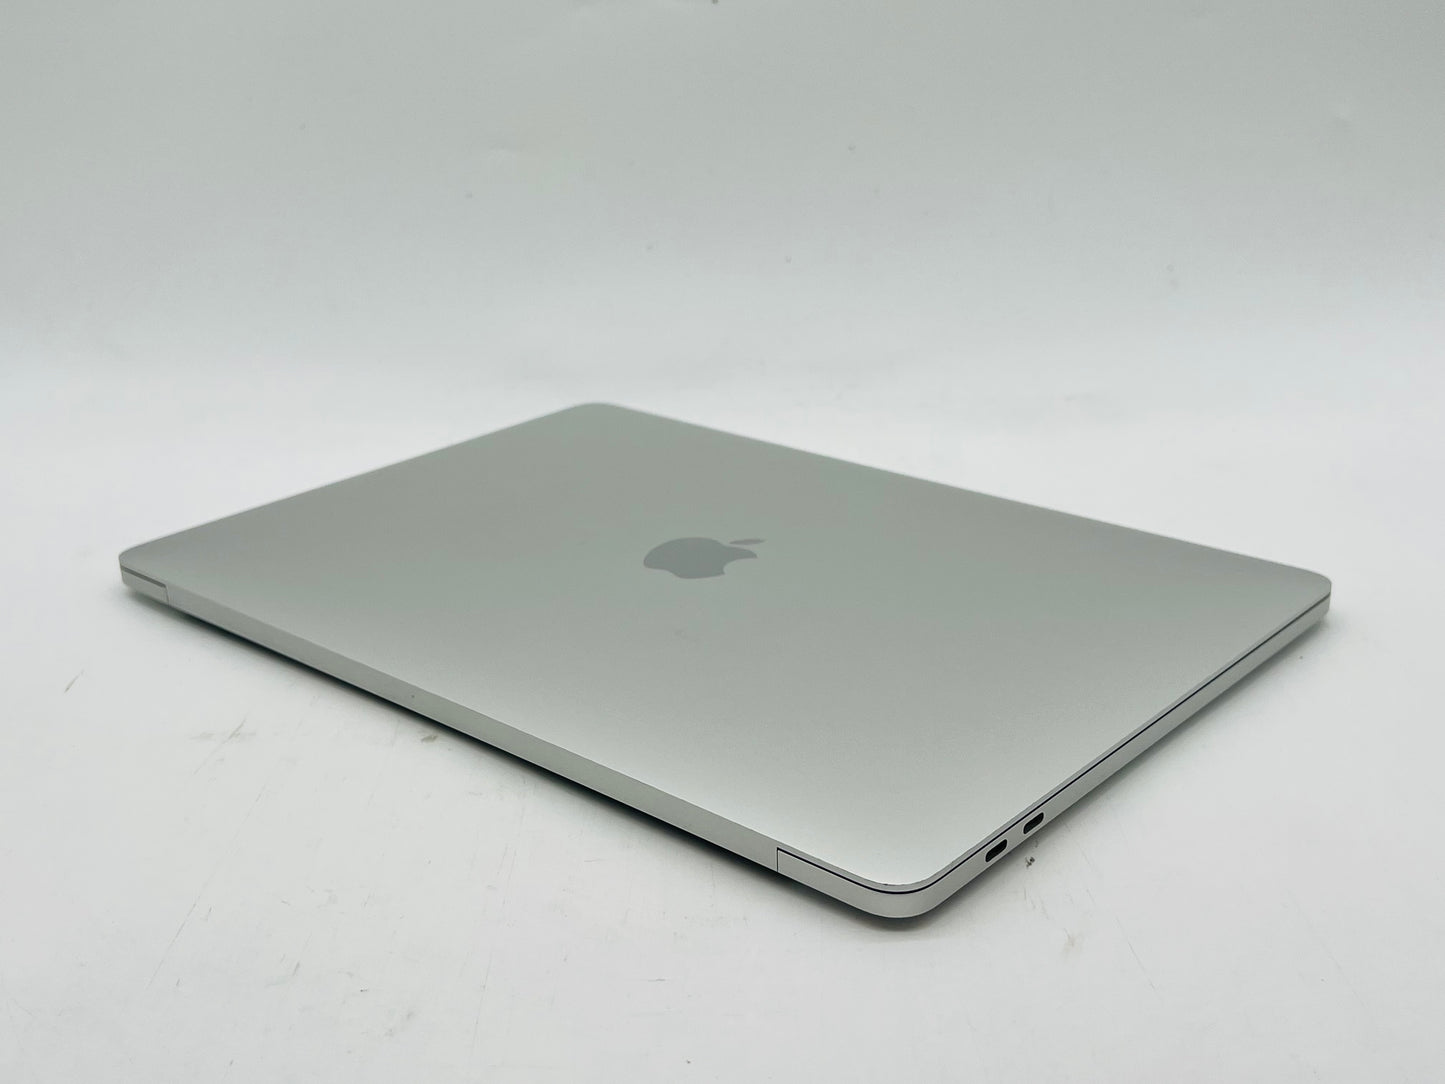 Apple 2019 MacBook Pro 13 in TB 1.4GHz Quad-Core i5 16GB RAM 256GB SSD IIPG645